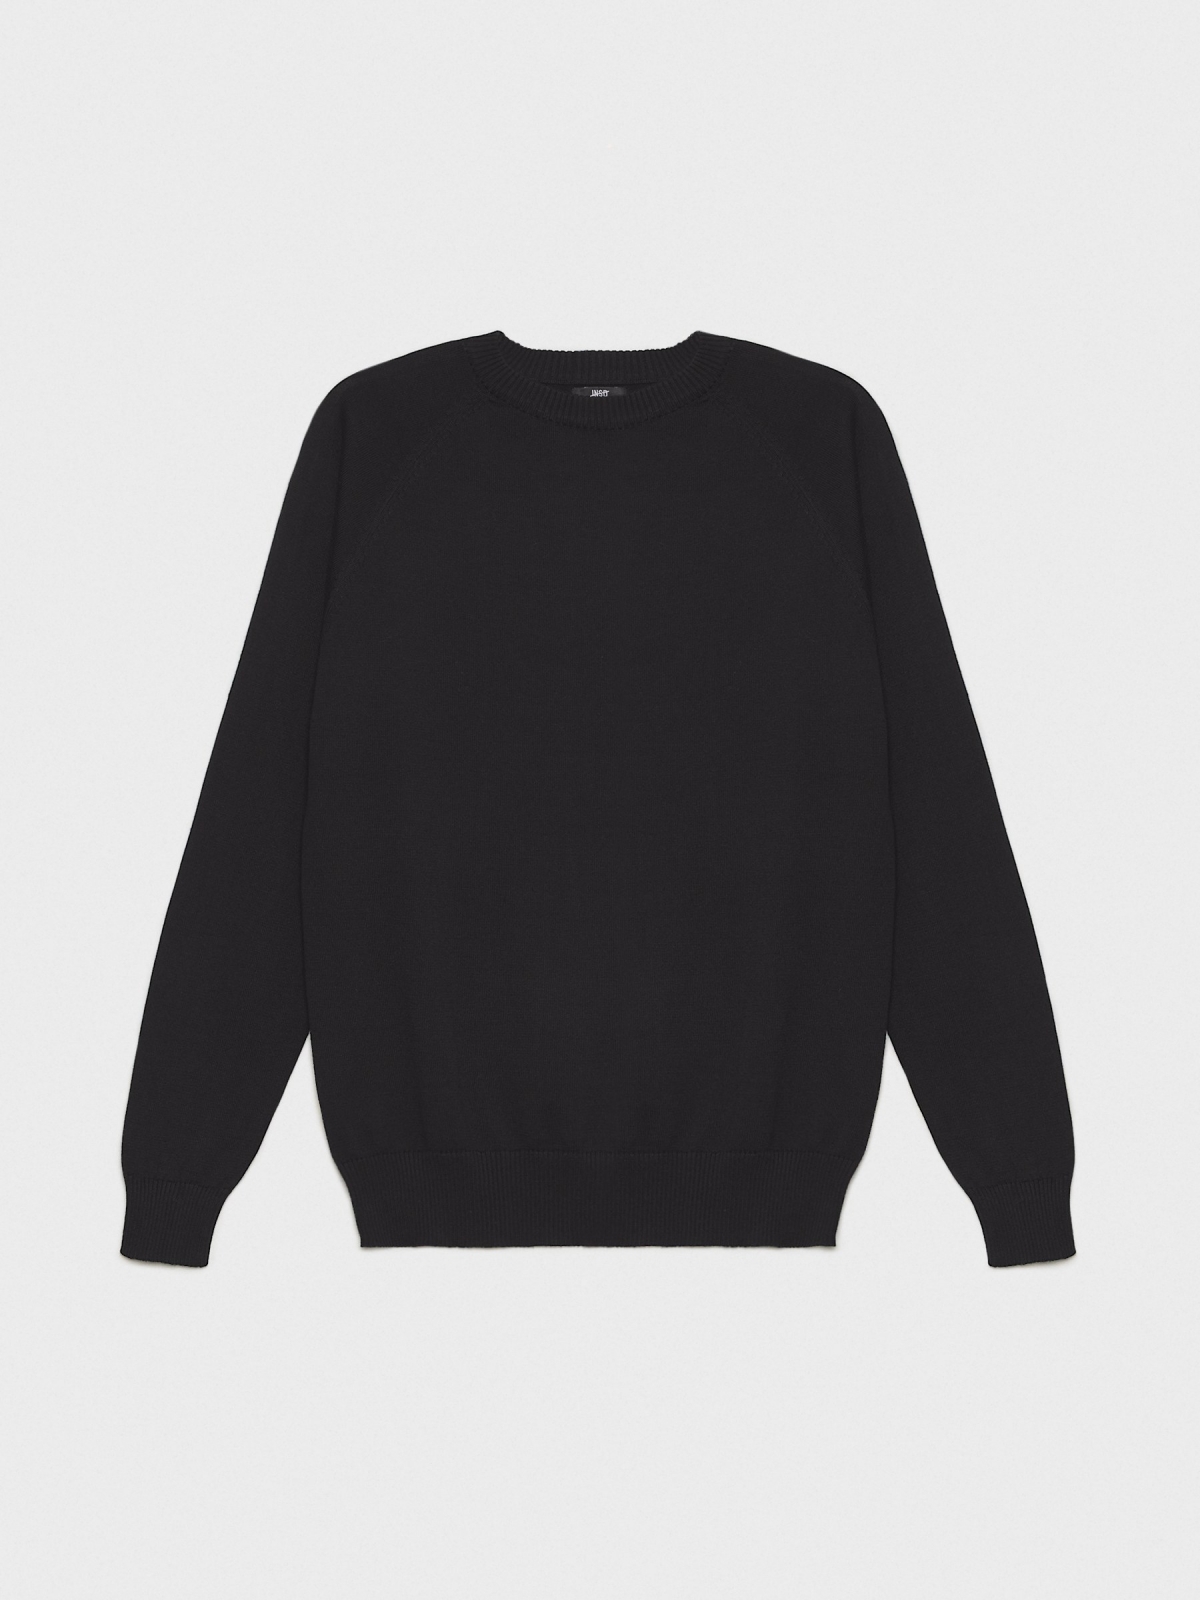  Plain sweater round neck black